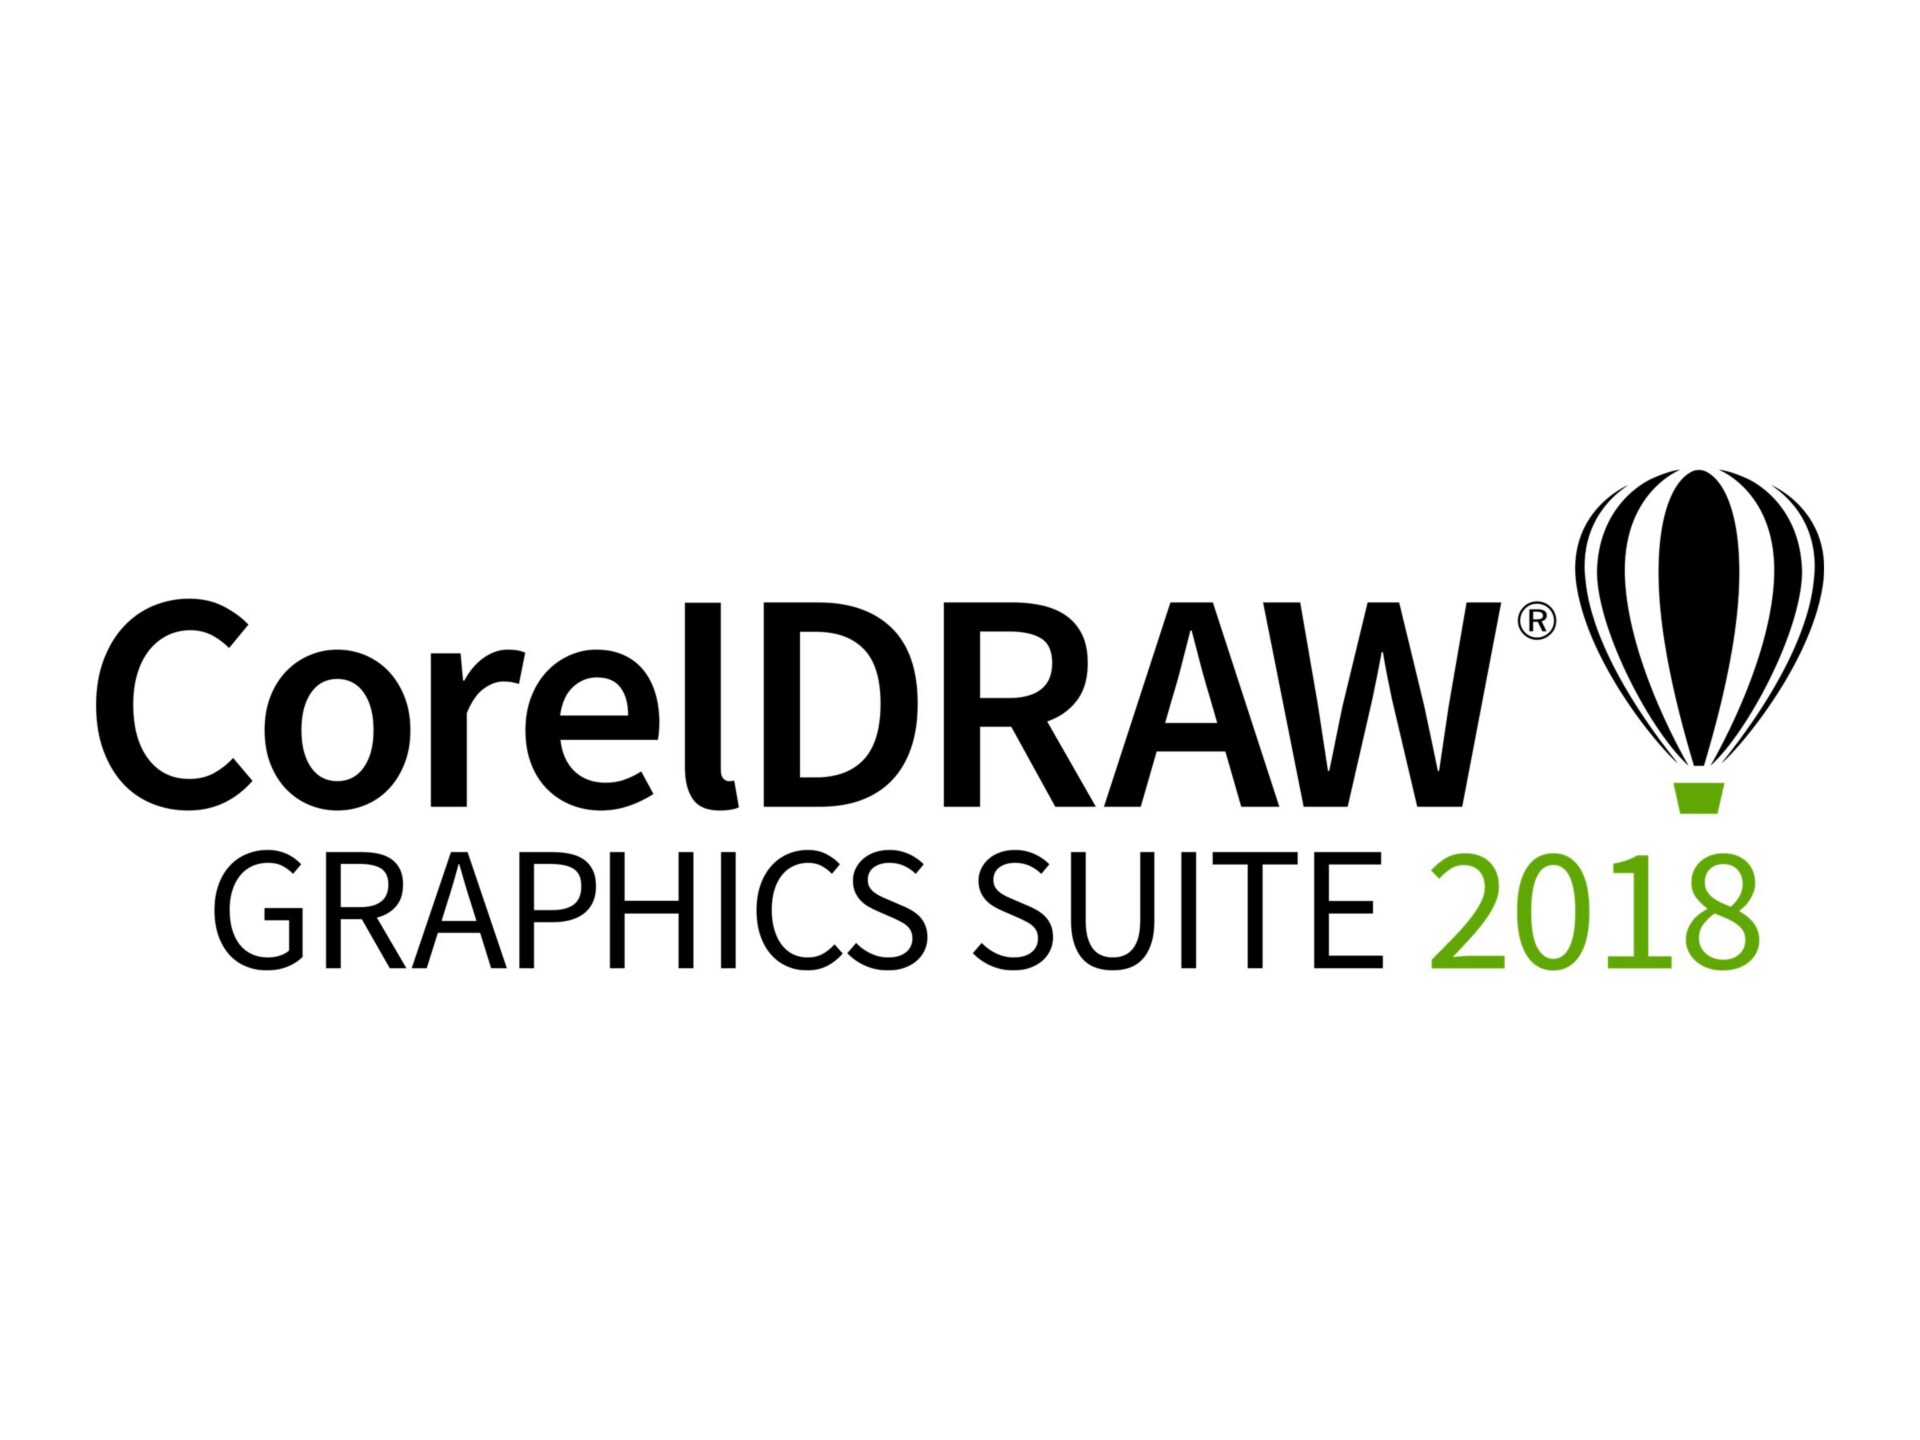 CorelDRAW Graphics Suite 2018 - license - 50 users